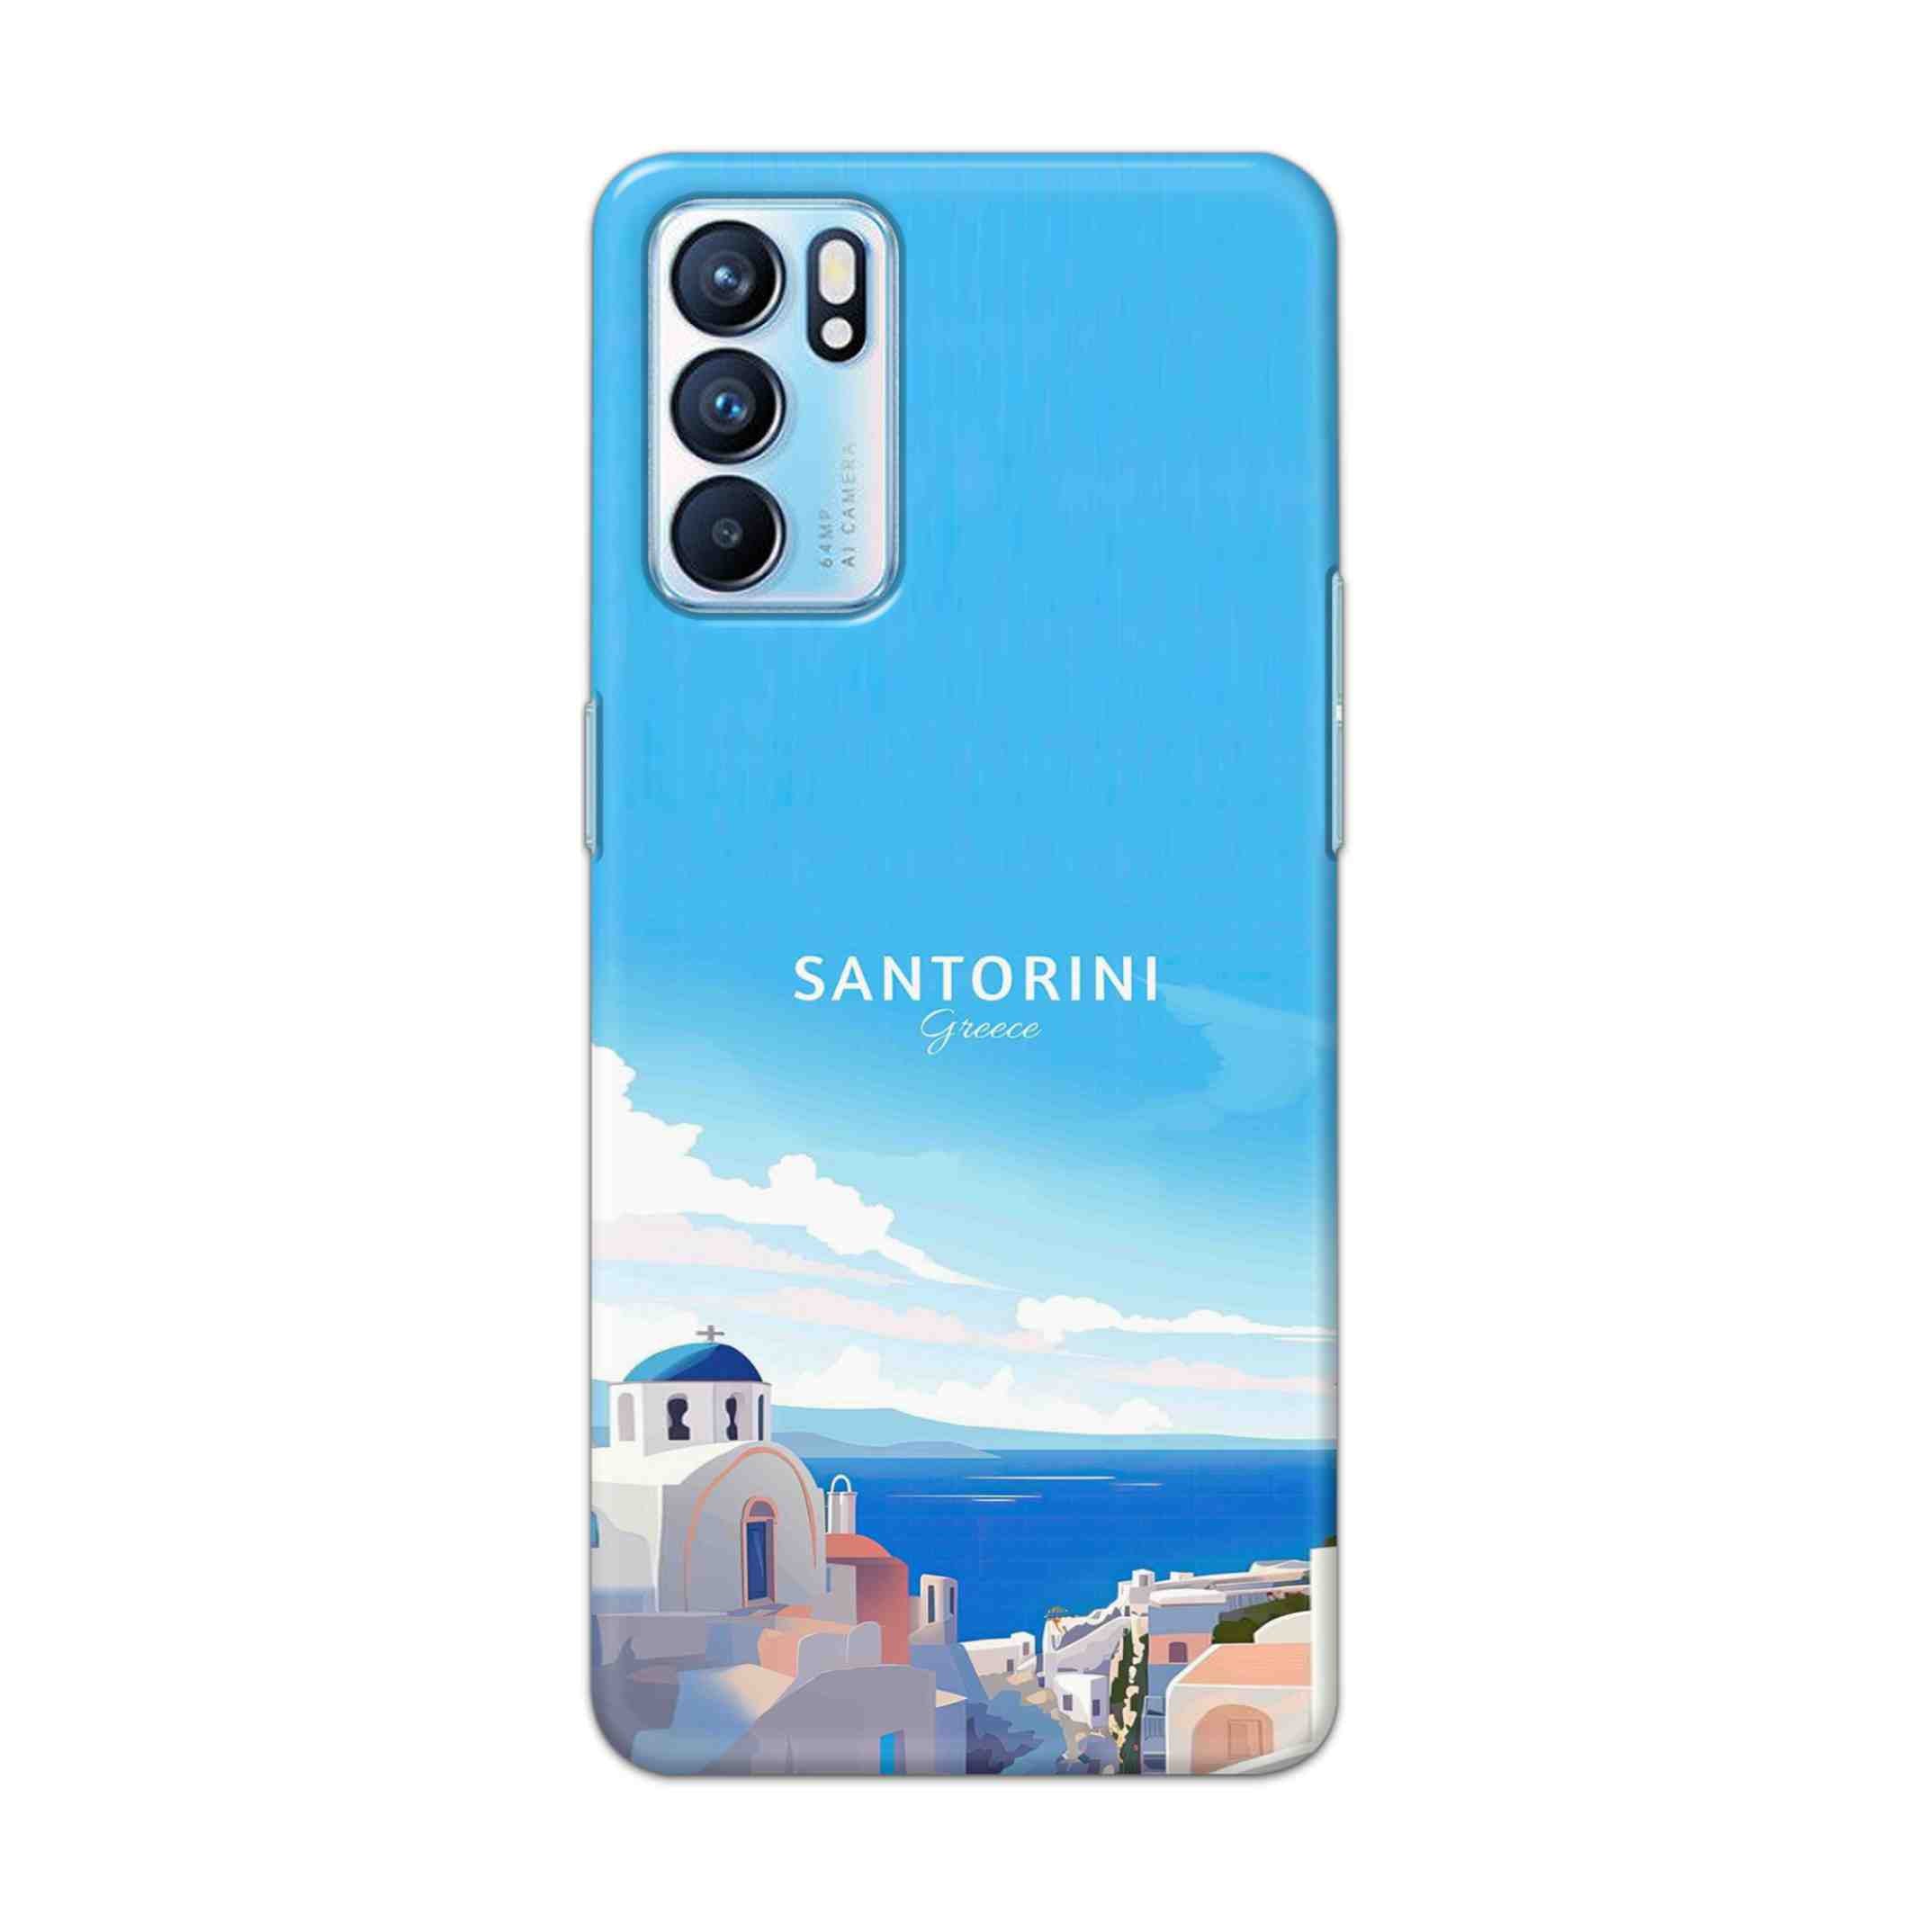 Buy Santorini Hard Back Mobile Phone Case Cover For OPPO RENO 6 Online